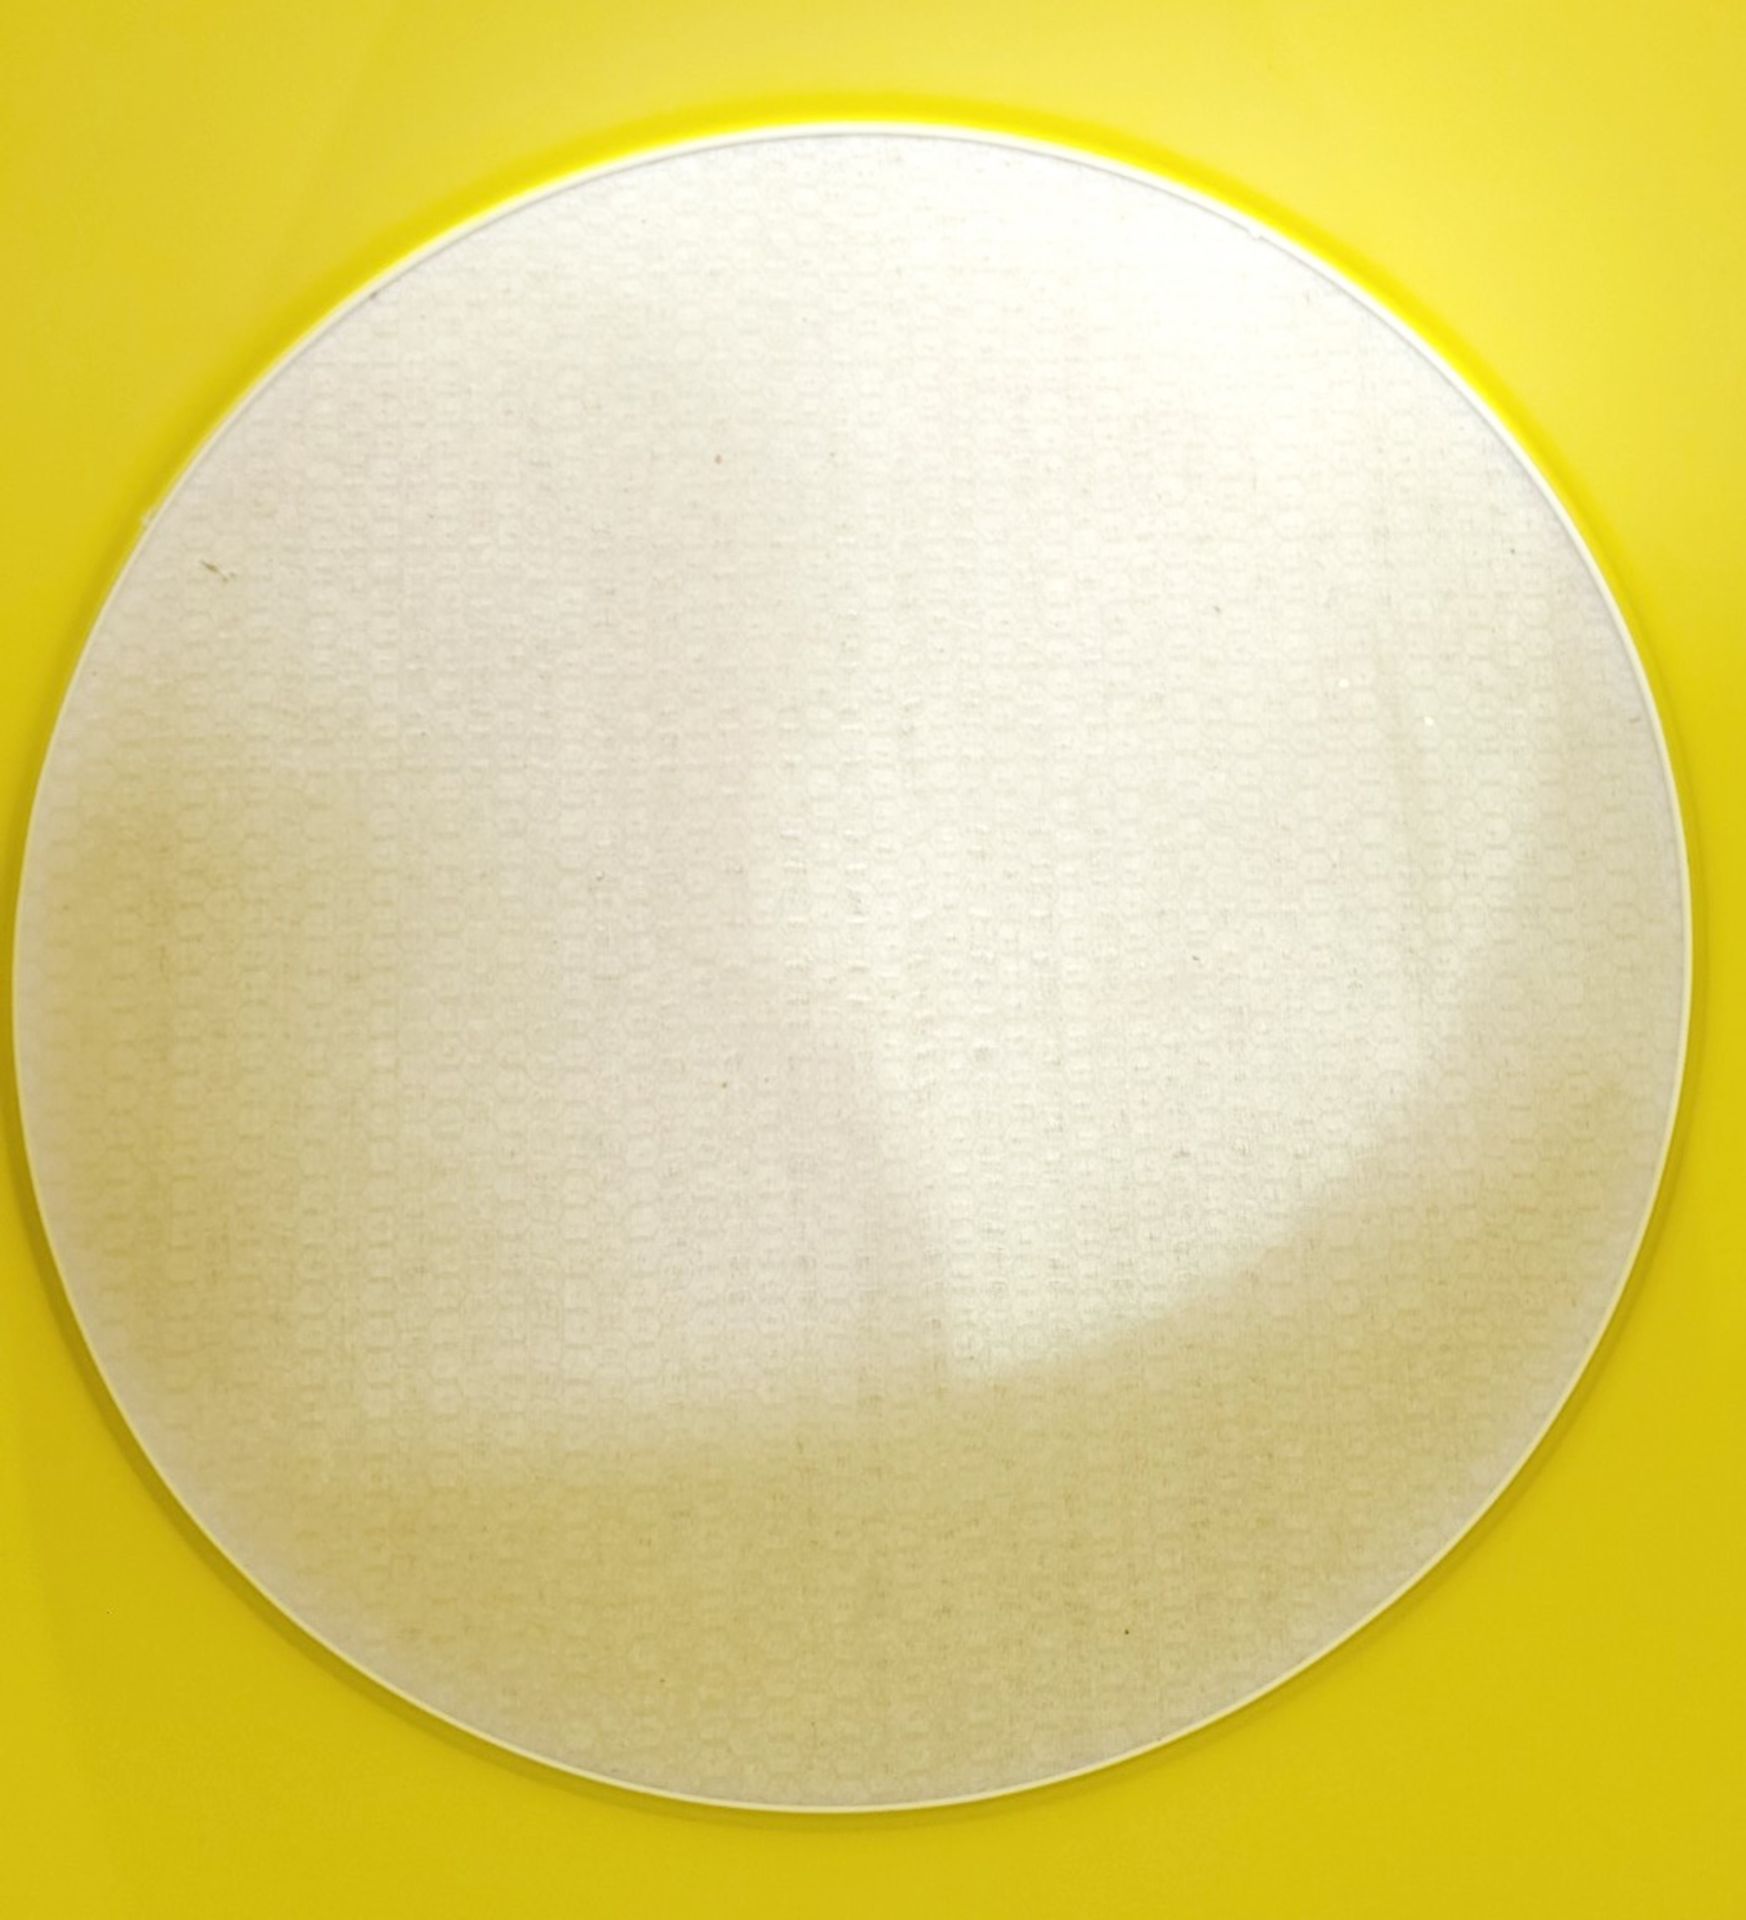 1 x BLUESUNTREE Large Scandi Metal White Pendant Drum Lamp Shape With Bright Yellow Interior 50cm - Image 2 of 5